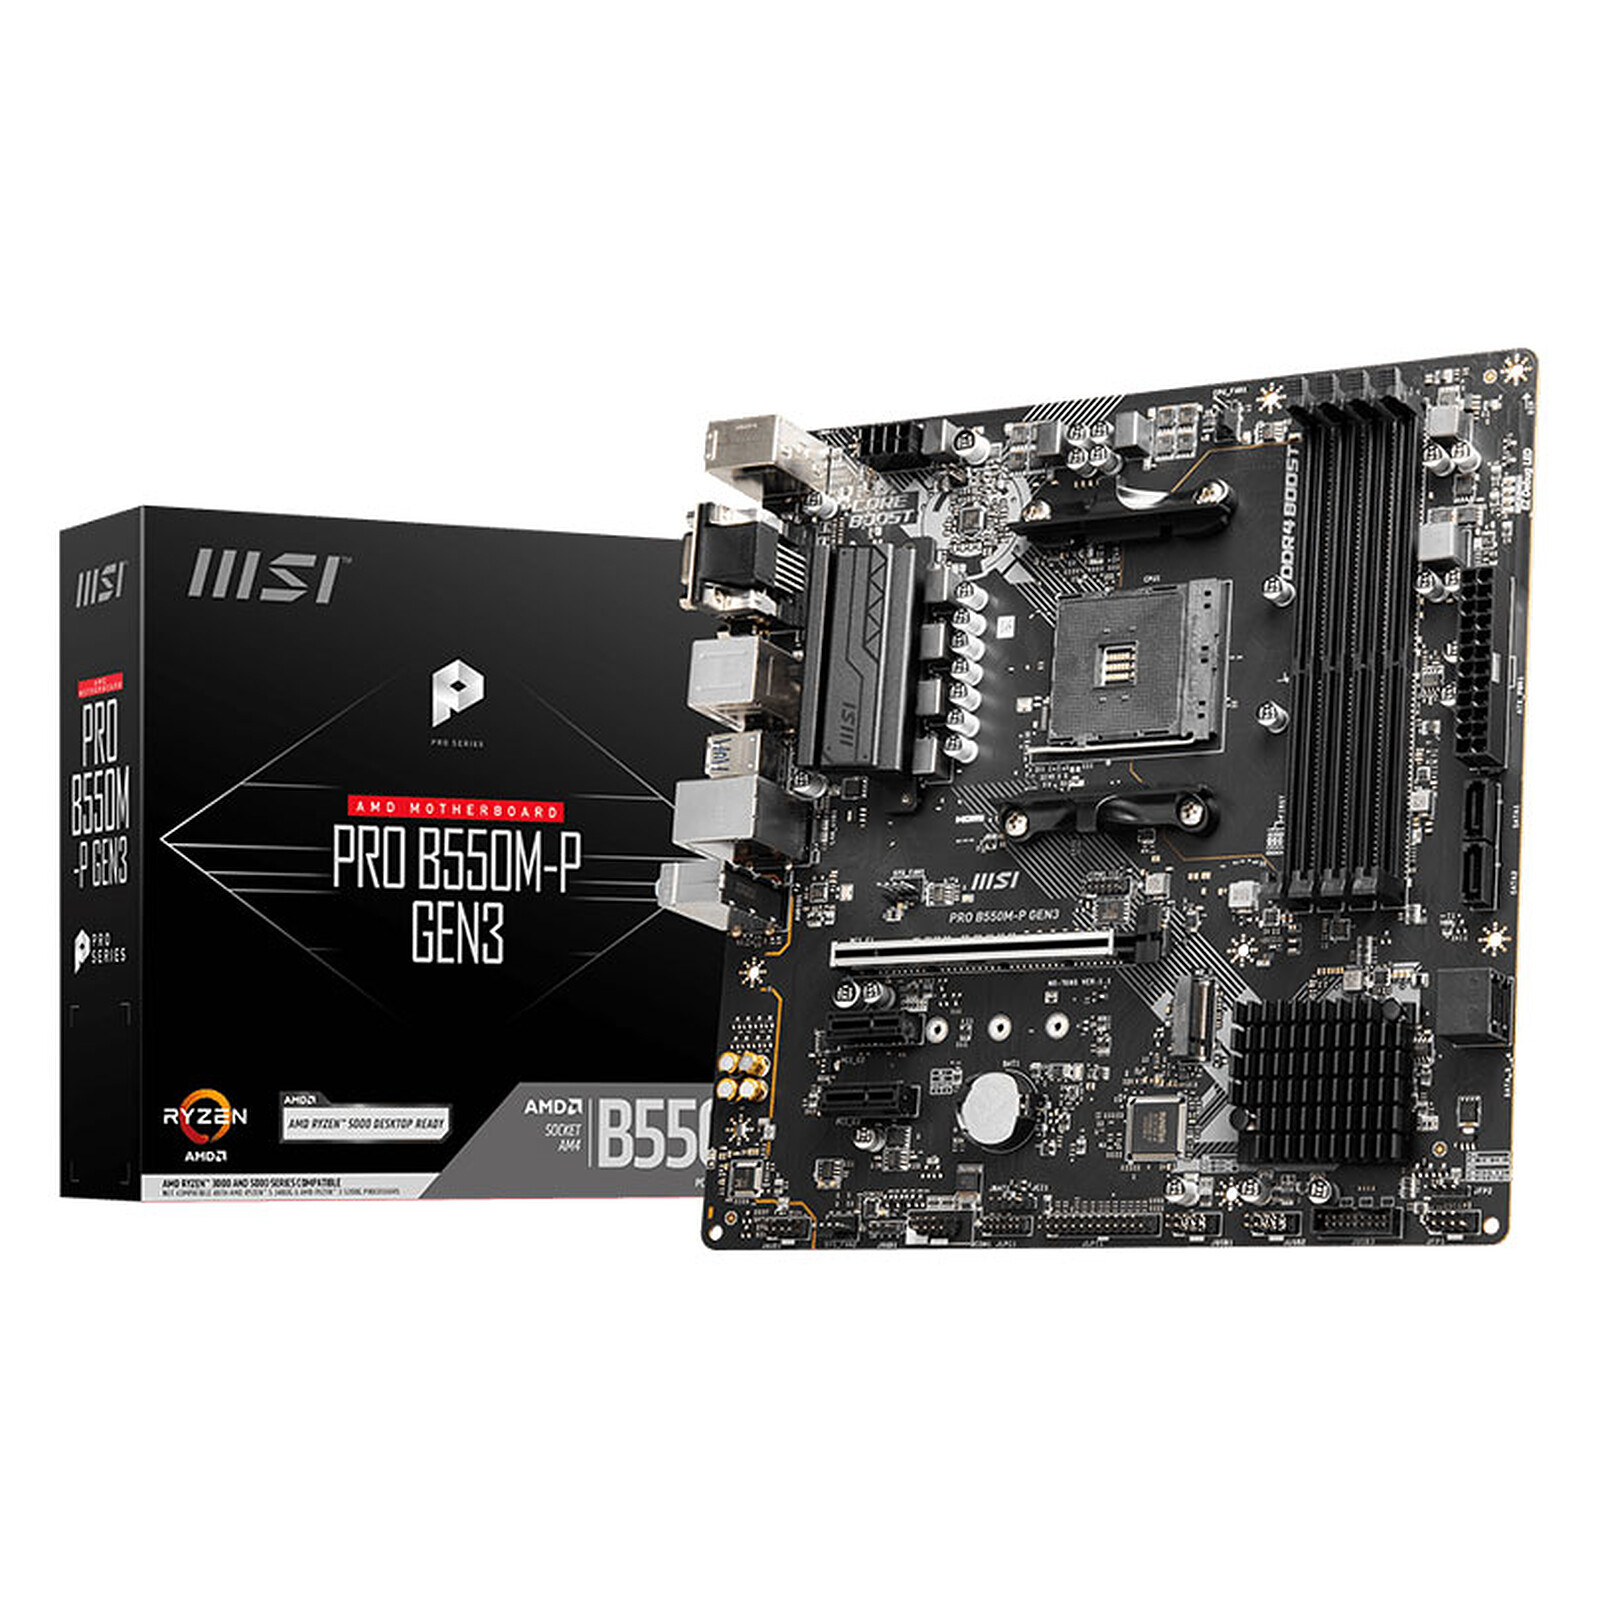  MSI B550 Gaming GEN3 Gaming Motherboard (AMD AM4, DDR4